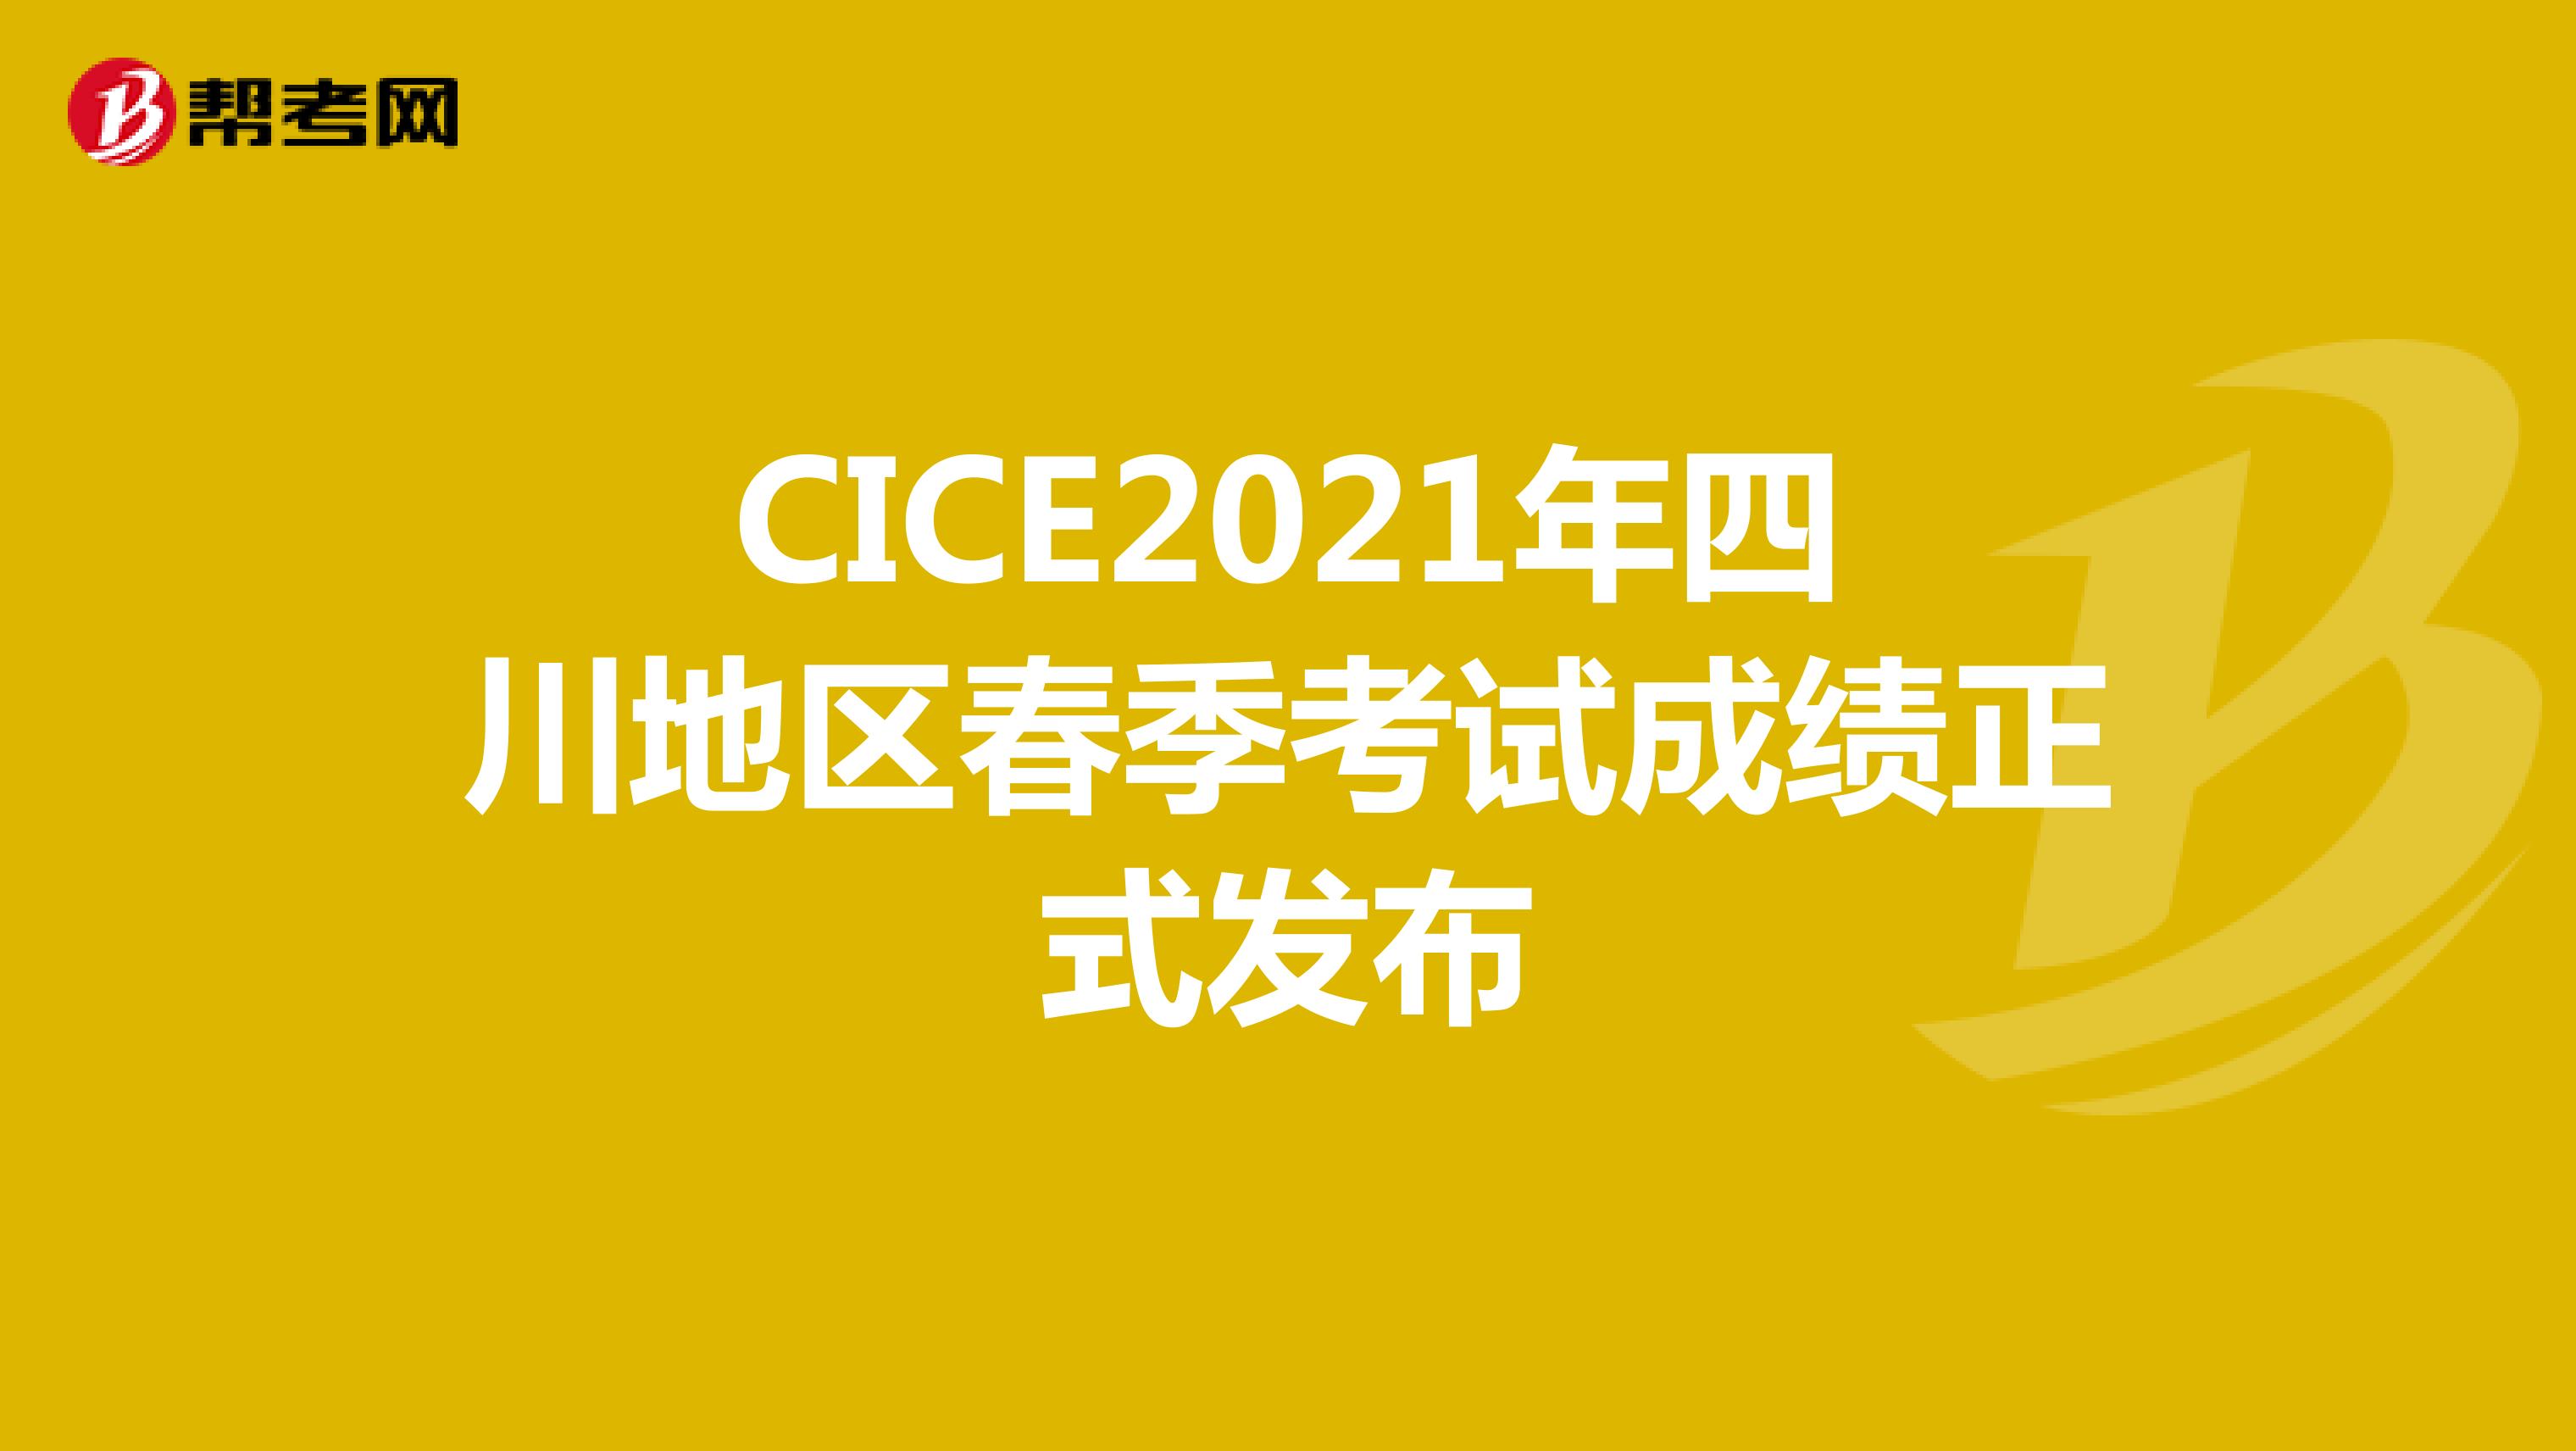 CICE2021年四川地区春季考试成绩正式发布